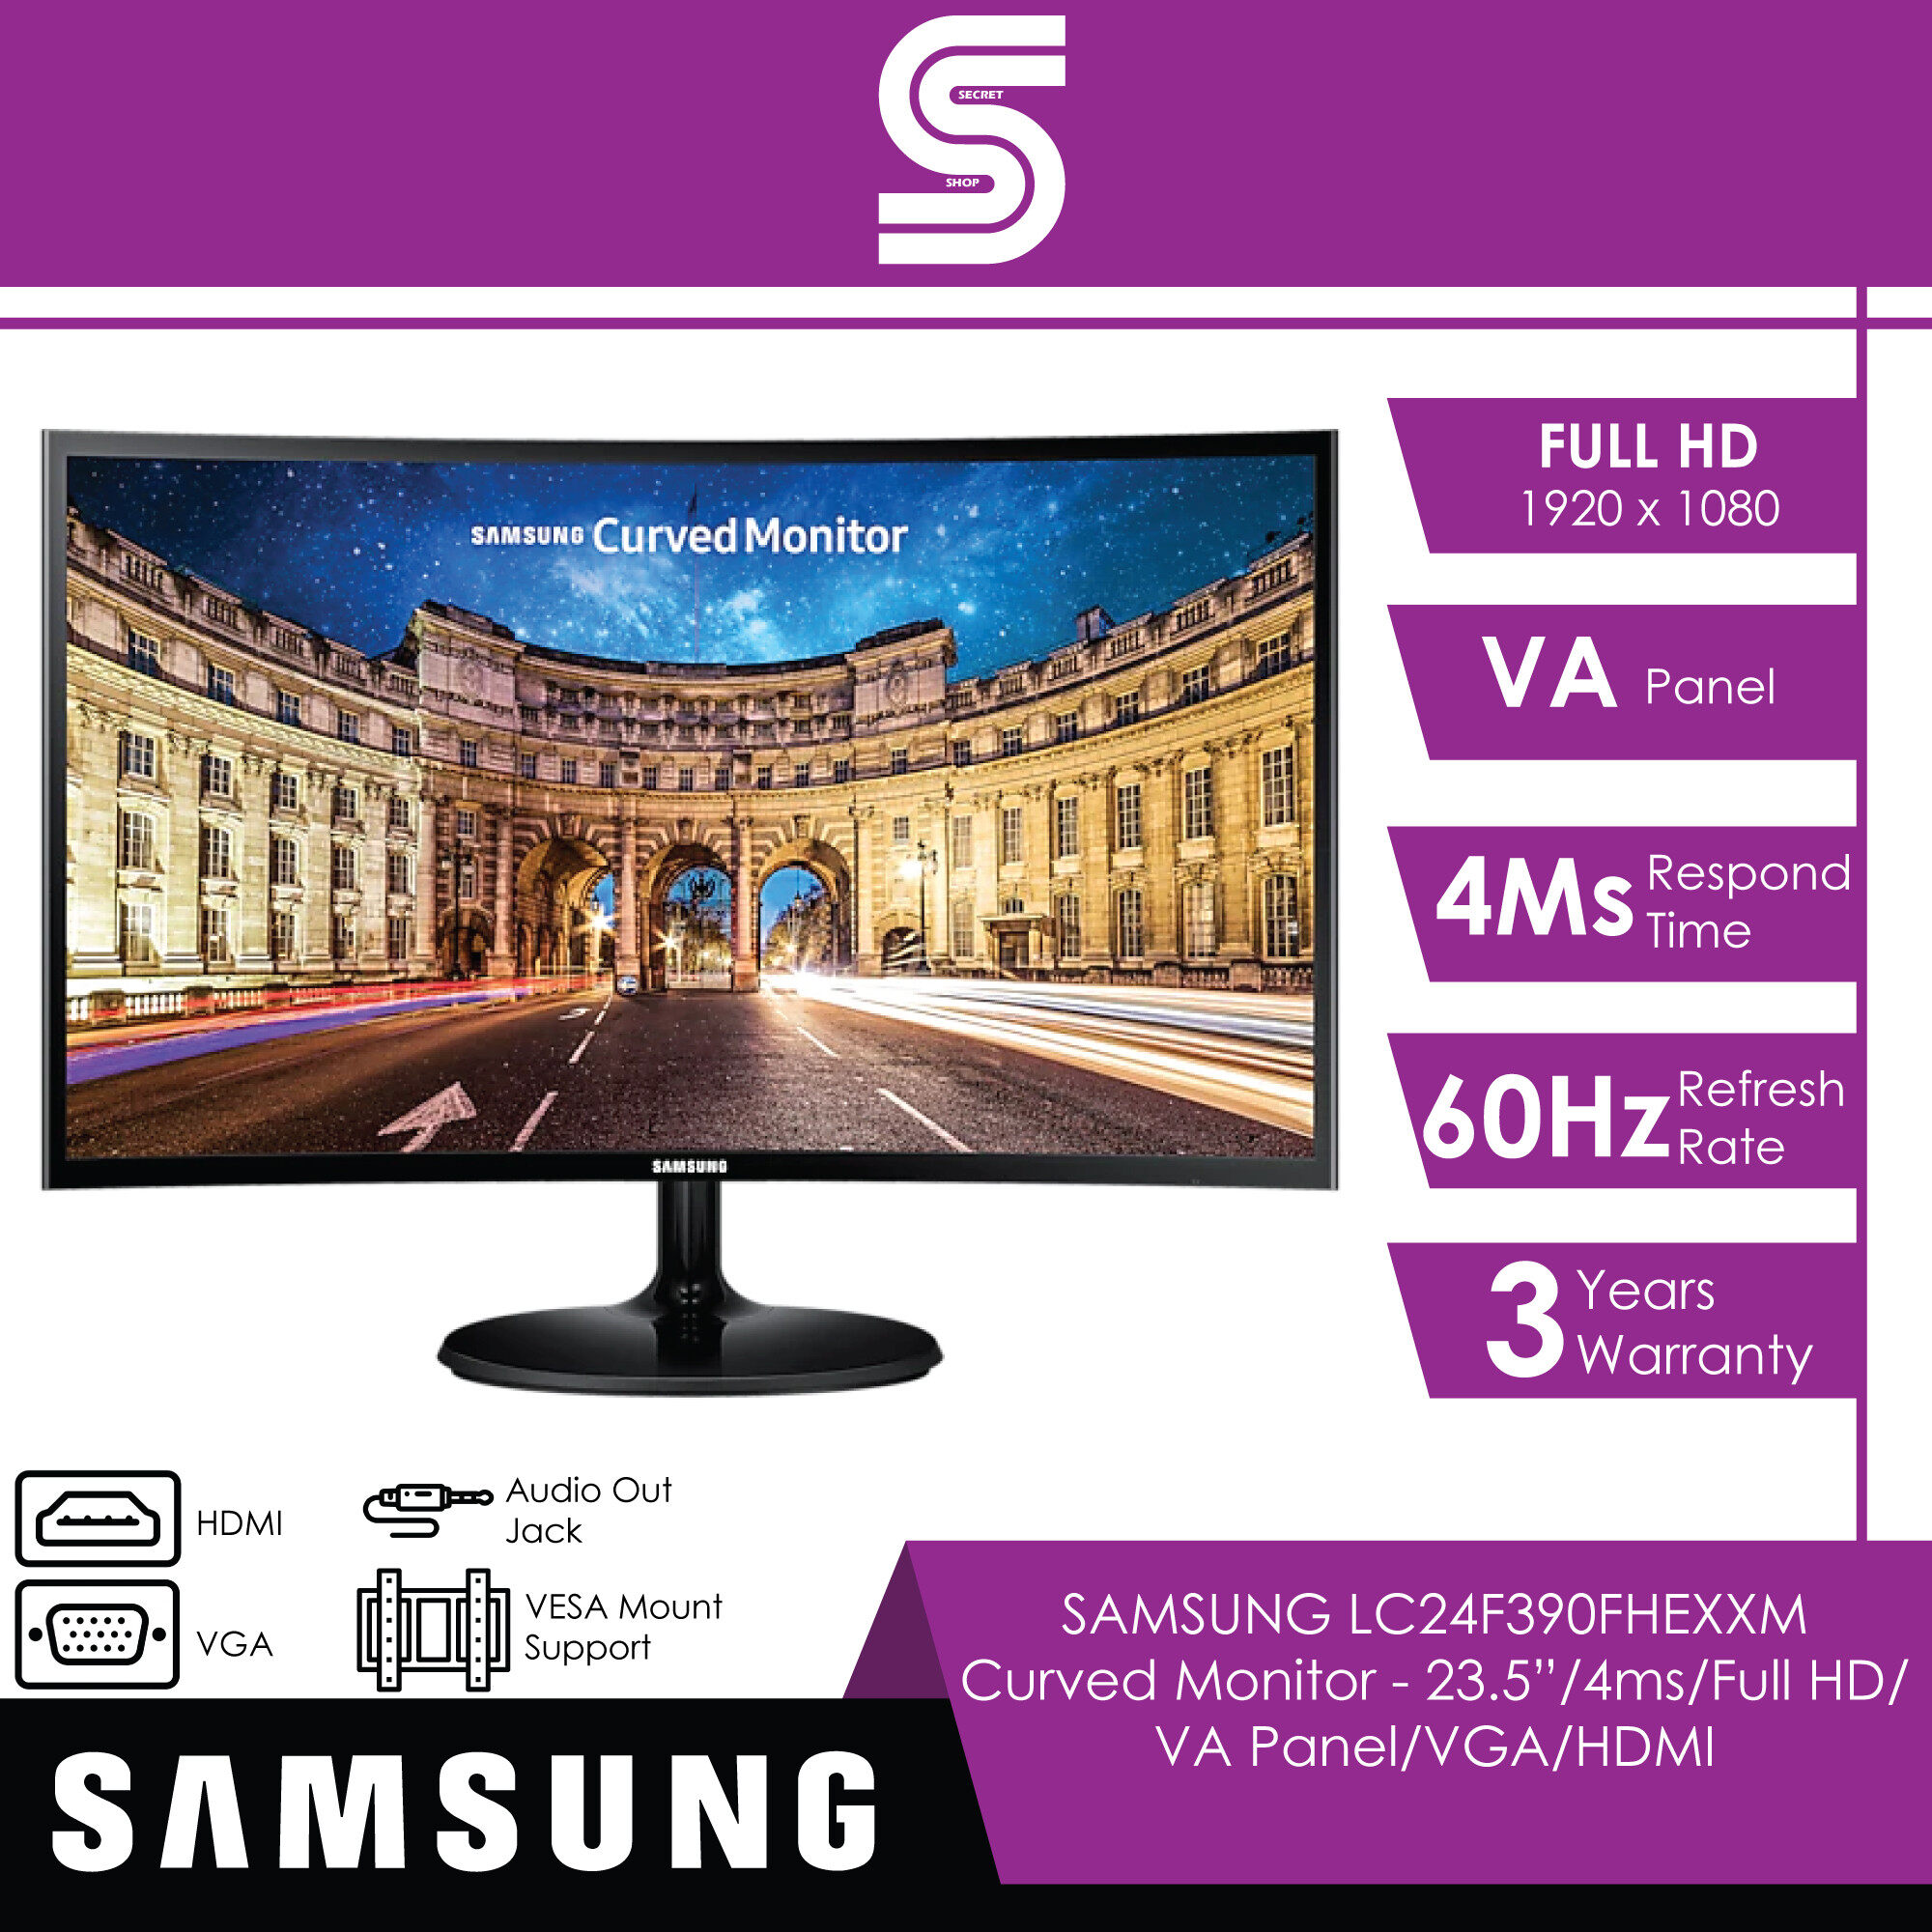 SAMSUNG LC24F390FHEXXM Curved Monitor - 23.5”/4ms/Full HD/ VA Panel/VGA/HDMI